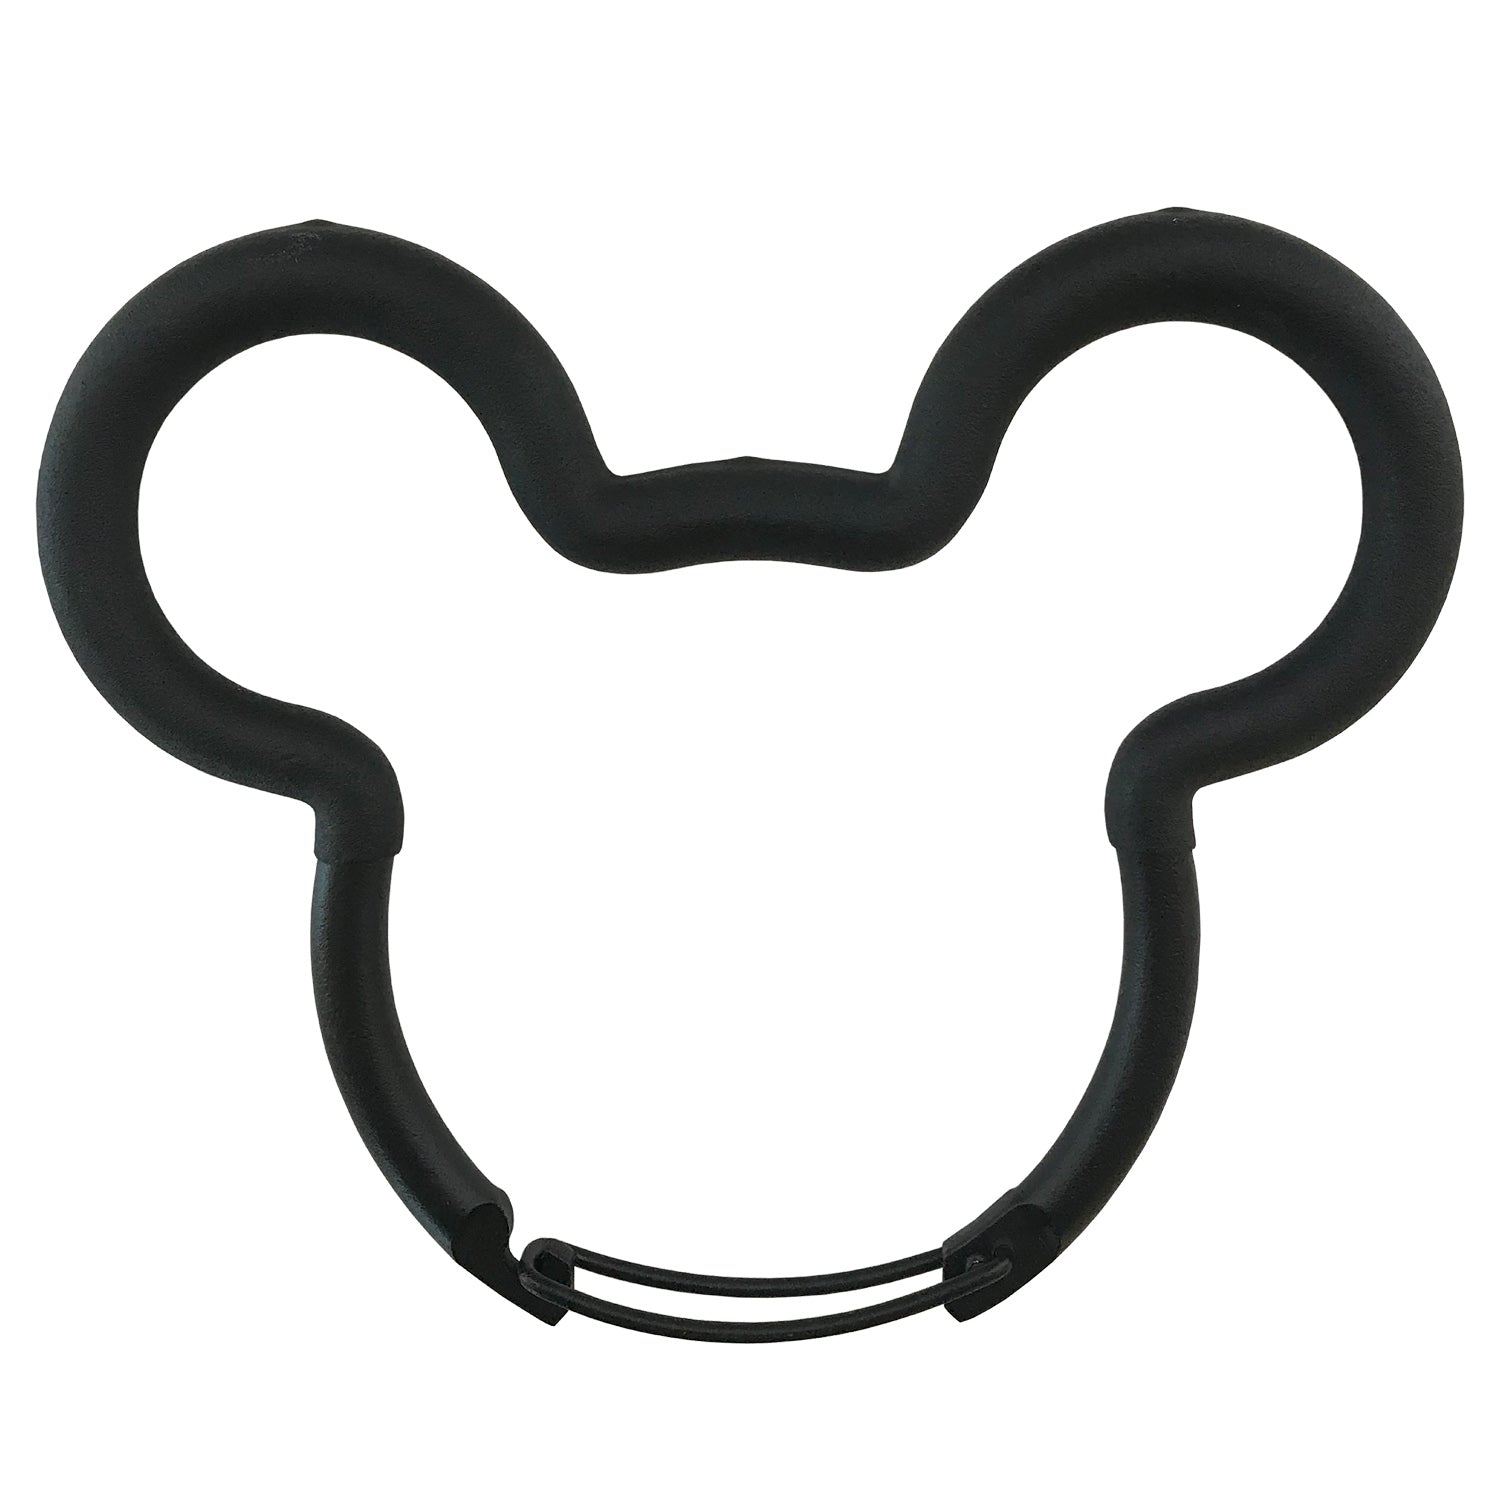 Petunia Pickle Bottom Mickey Mouse Stroller Hook in Black